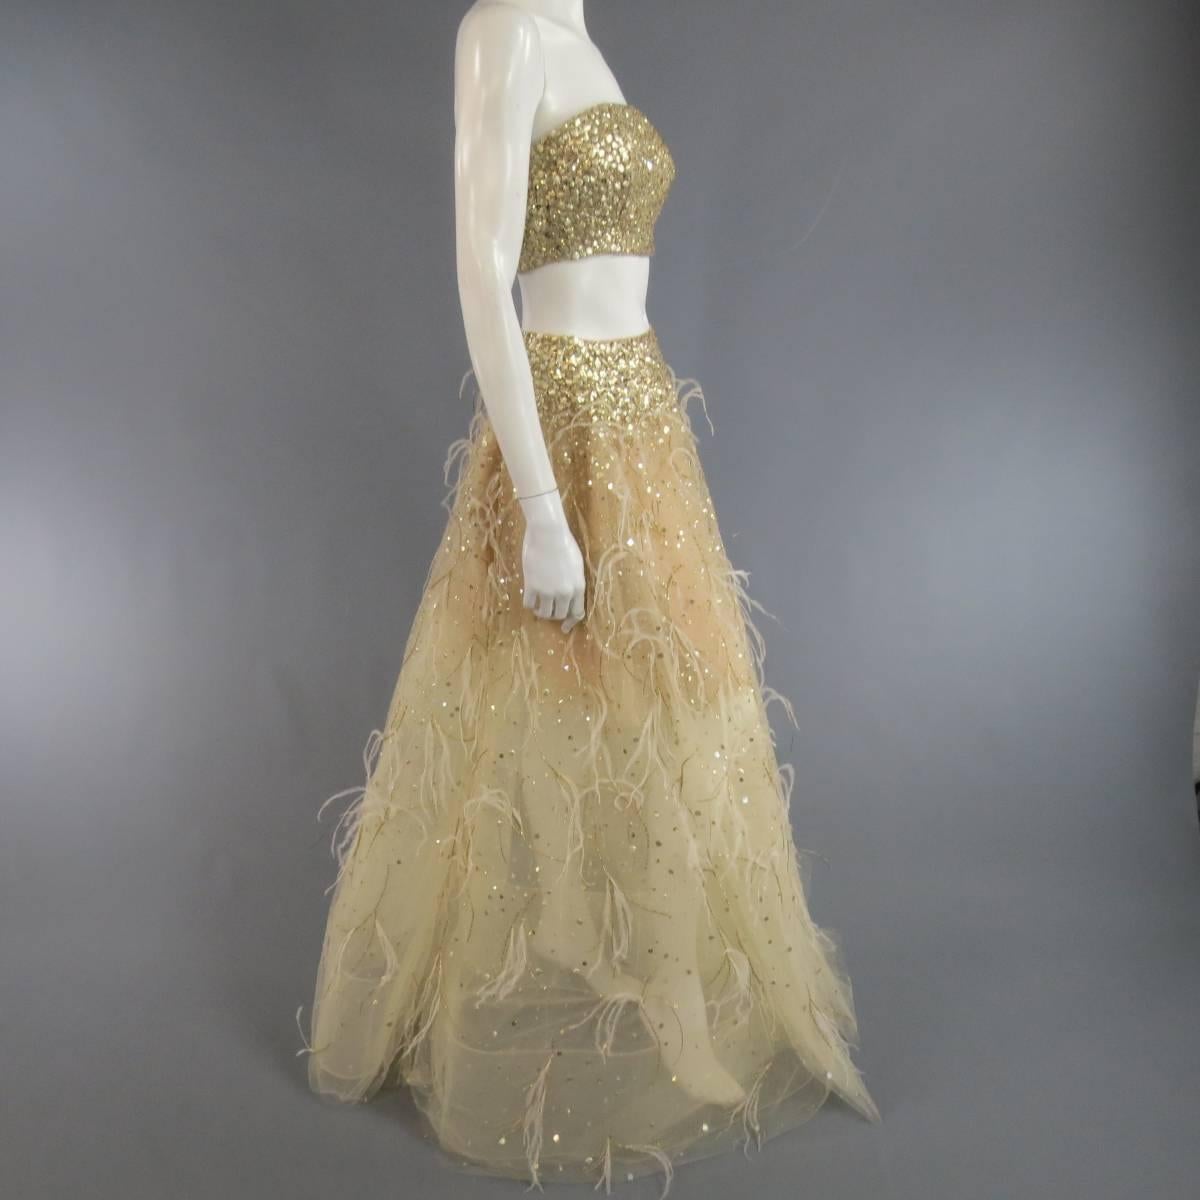 OSCAR DE LA RENTA Spring 2015 4 Gold Feather Tulle Skirt Gold Sequin Bustier Set 1